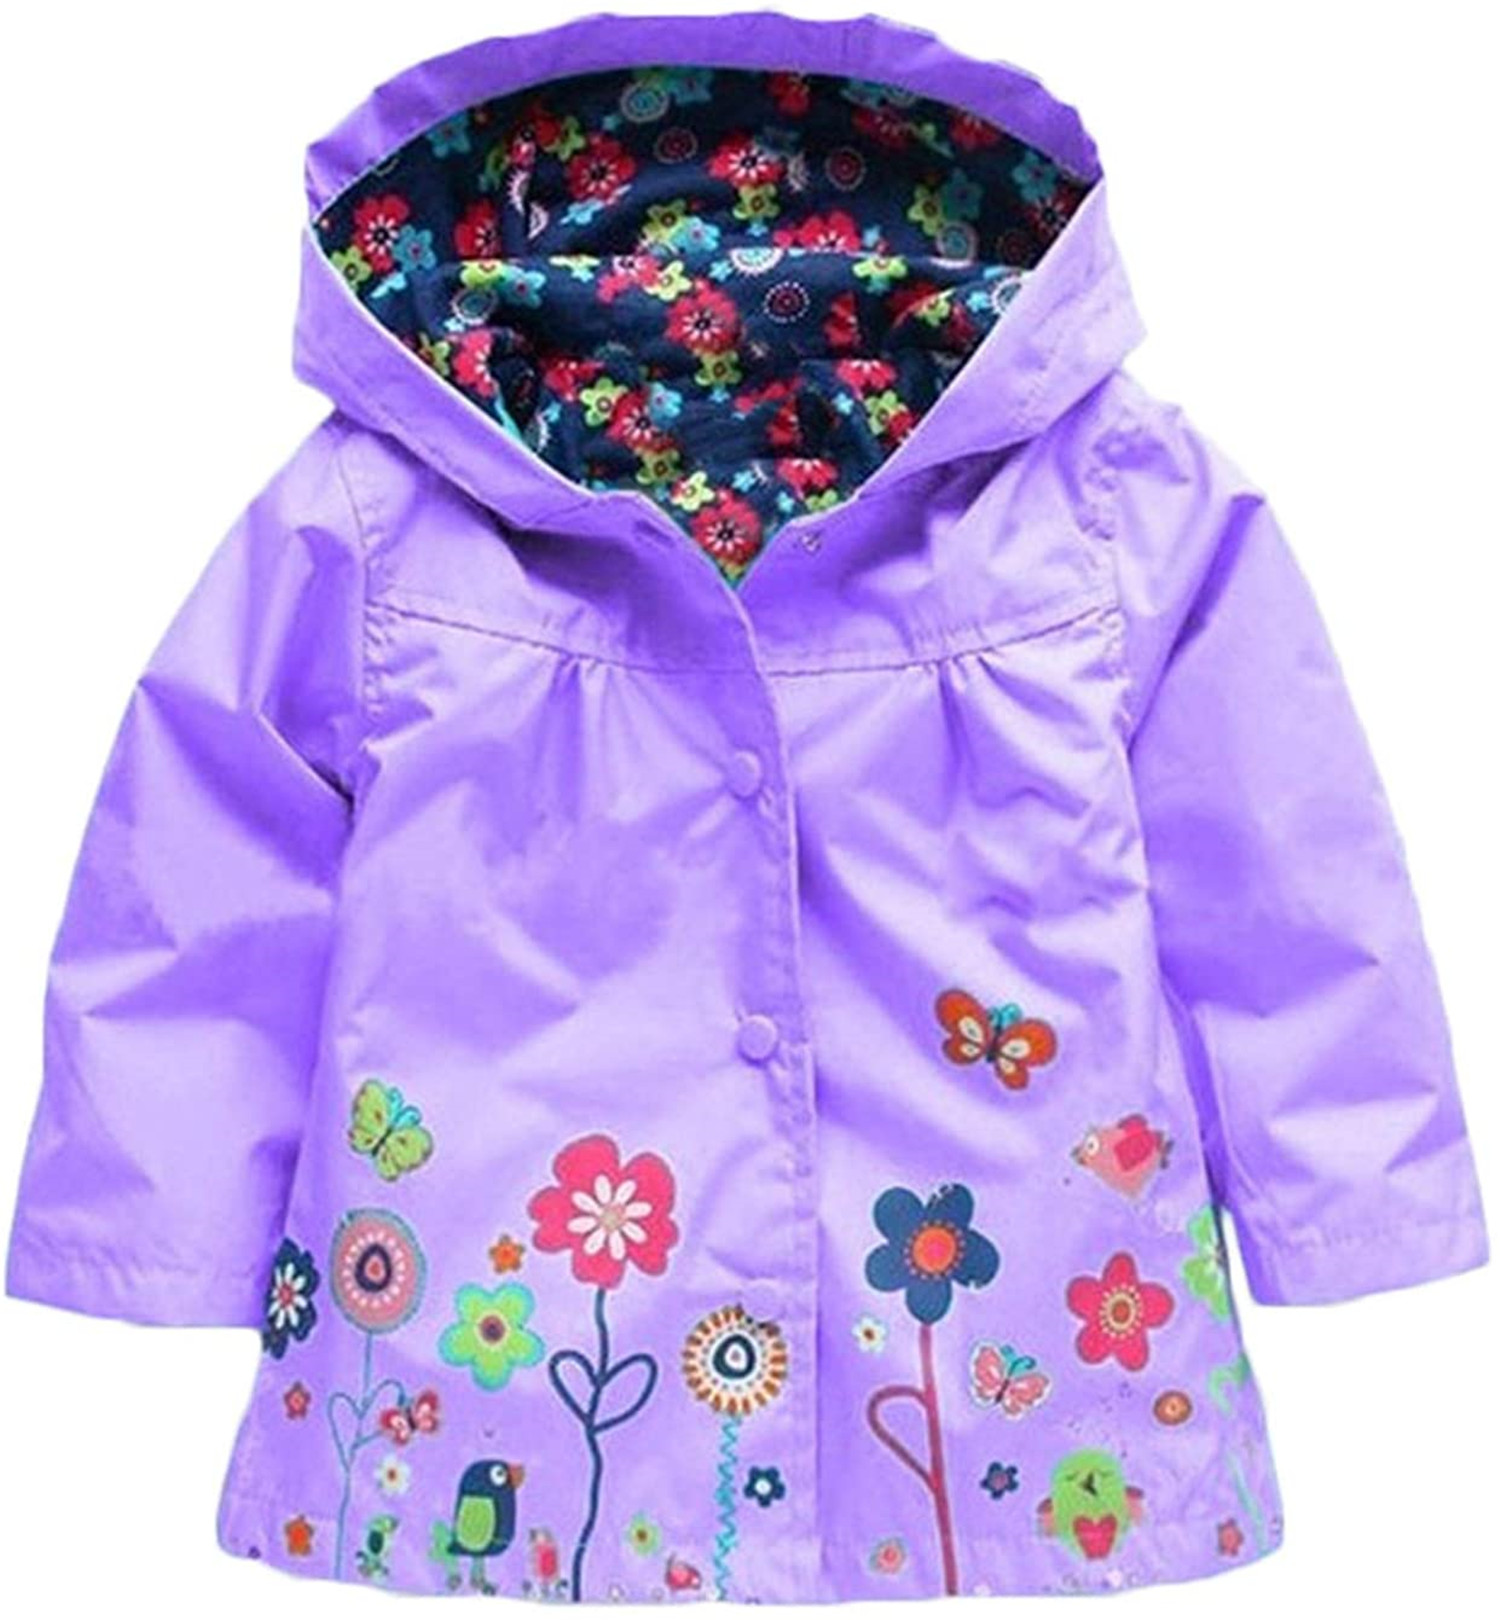 Kiapeise Kids Children Girl Flowers Hooded Waterproof Windproof Raincoat Jacket Outwear - image 3 of 4